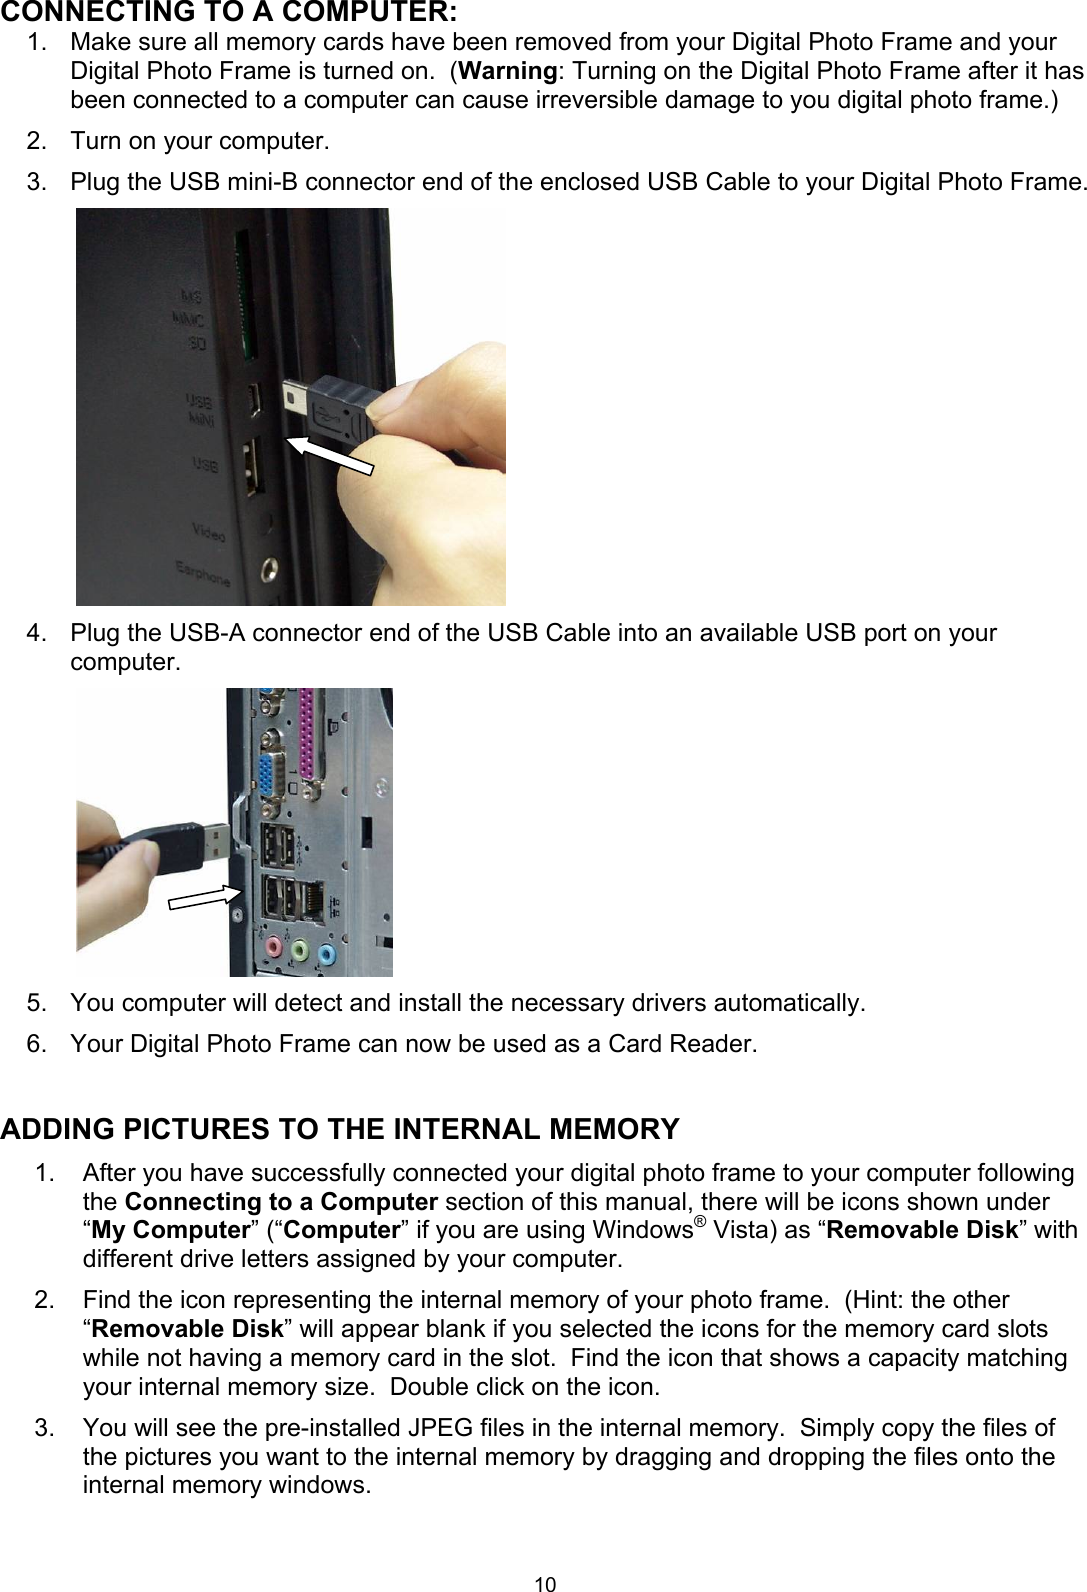 Page 10 of 12 - Gear-Head Gear-Head-Gear-Head-Digital-Photo-Frame-10-4Dpf200-Users-Manual WWM161299_109240_GH_10_4DPF200_Rev070817